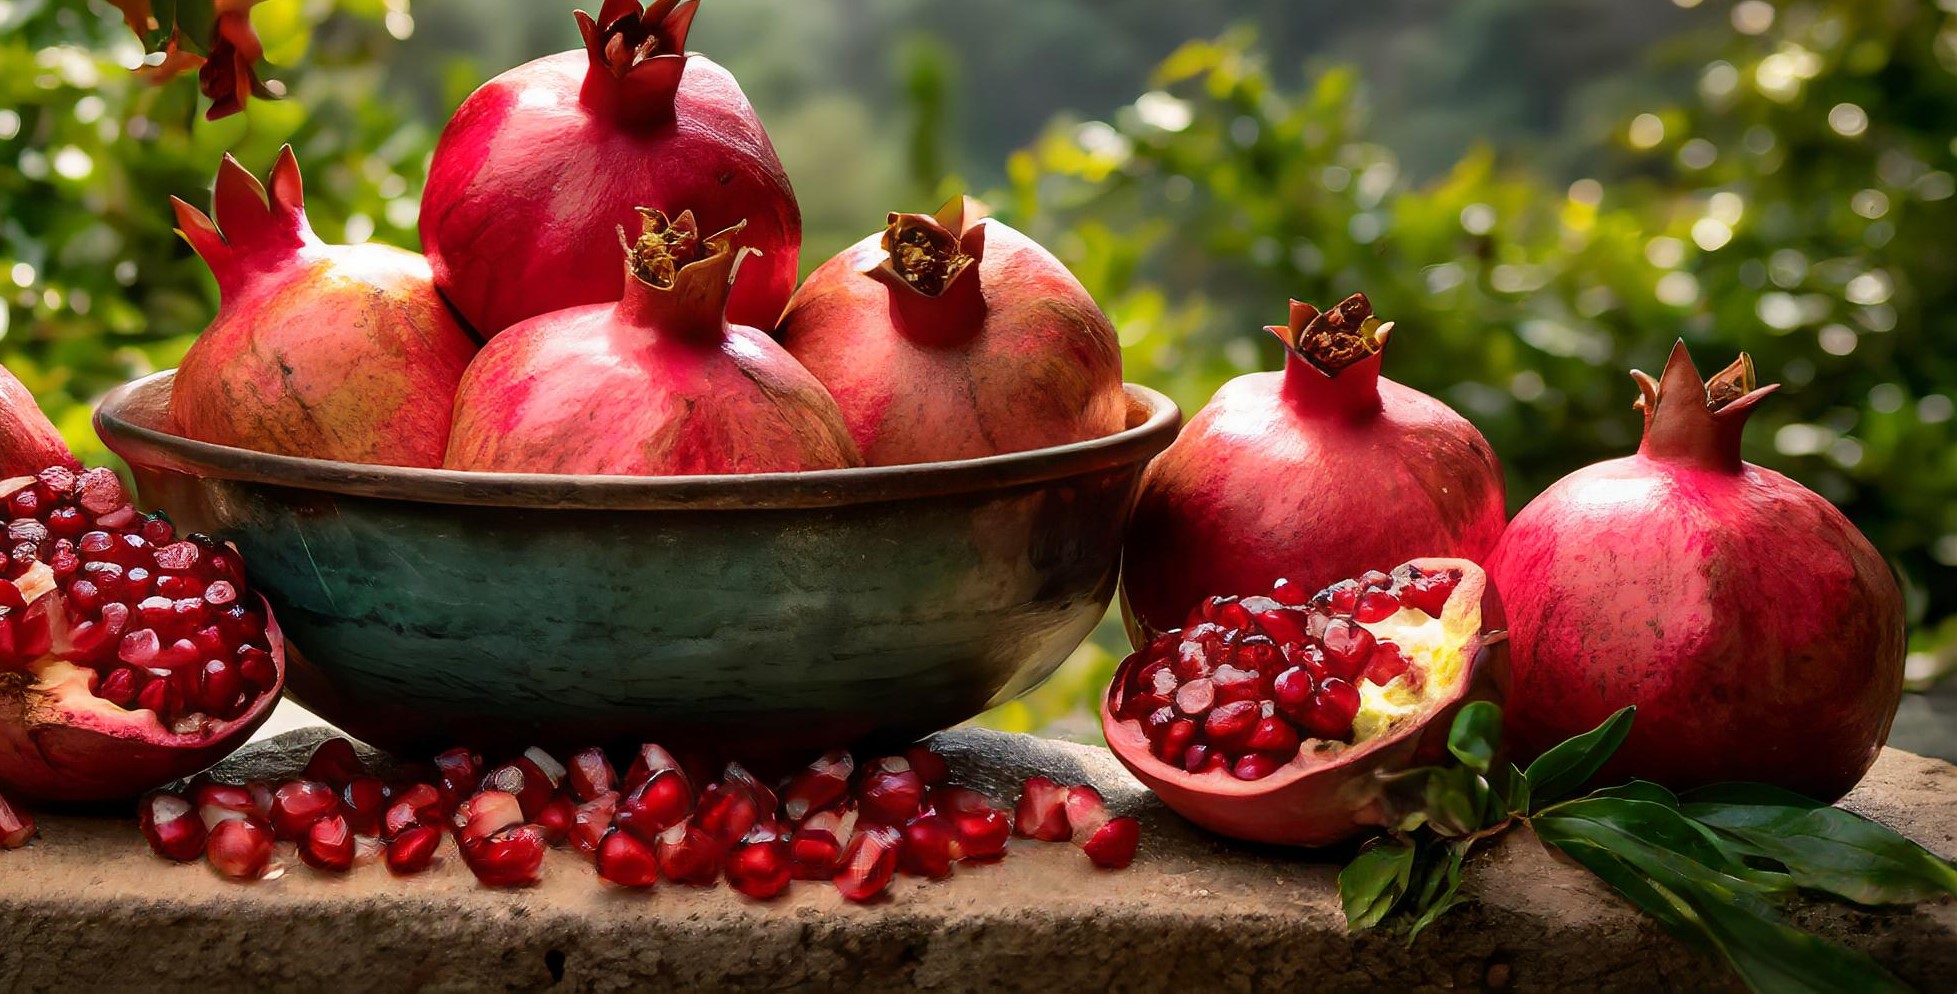 Pomegranate health benefits image